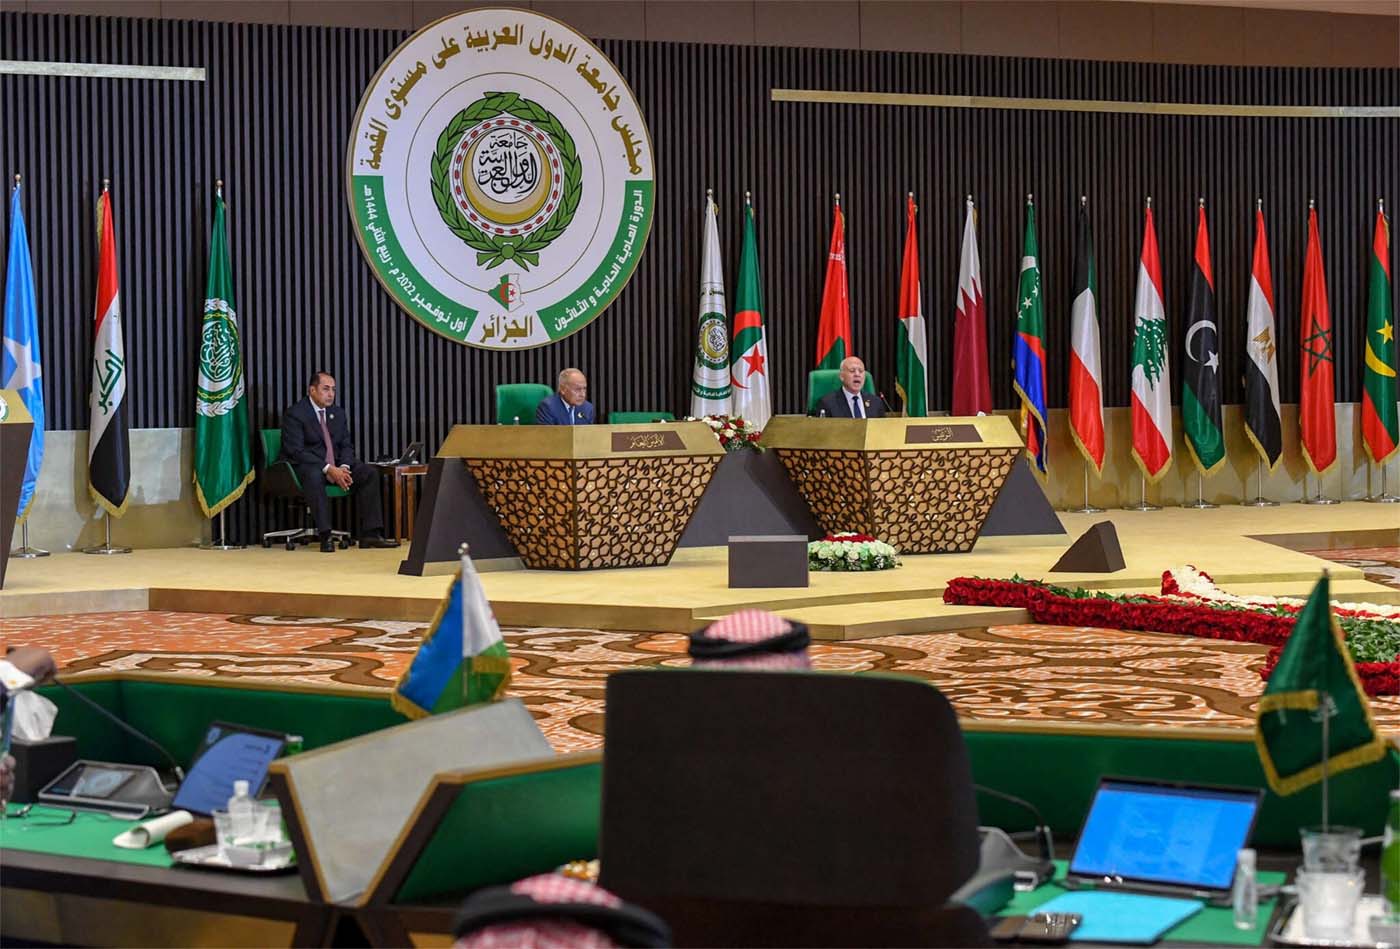 The 22-member Arab League last held its summit in 2019